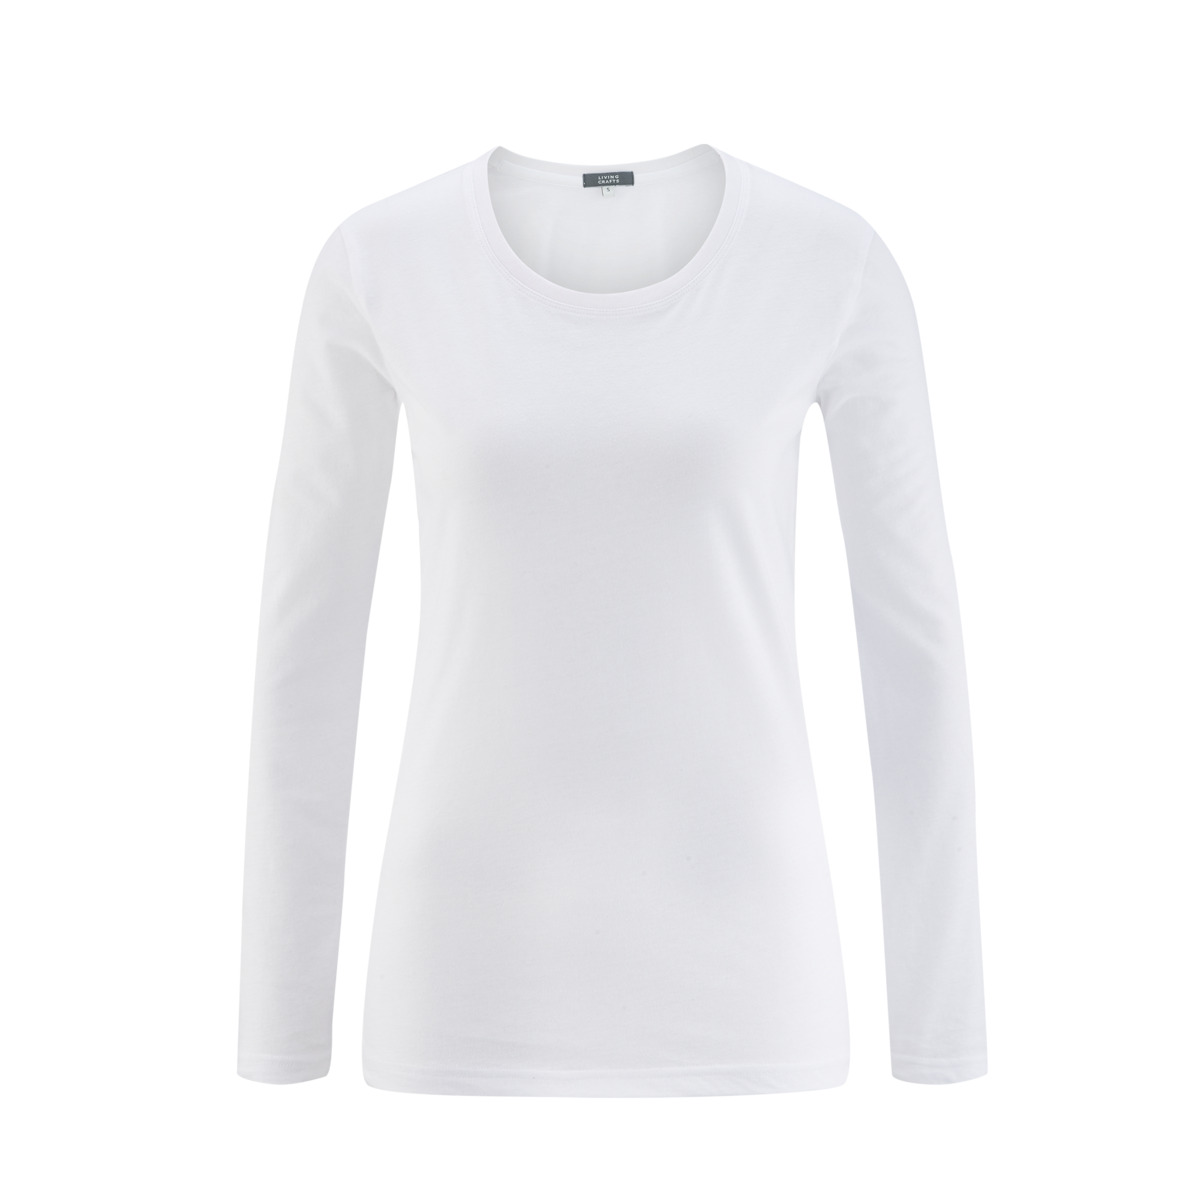 White Long-sleeved shirt, FIONA